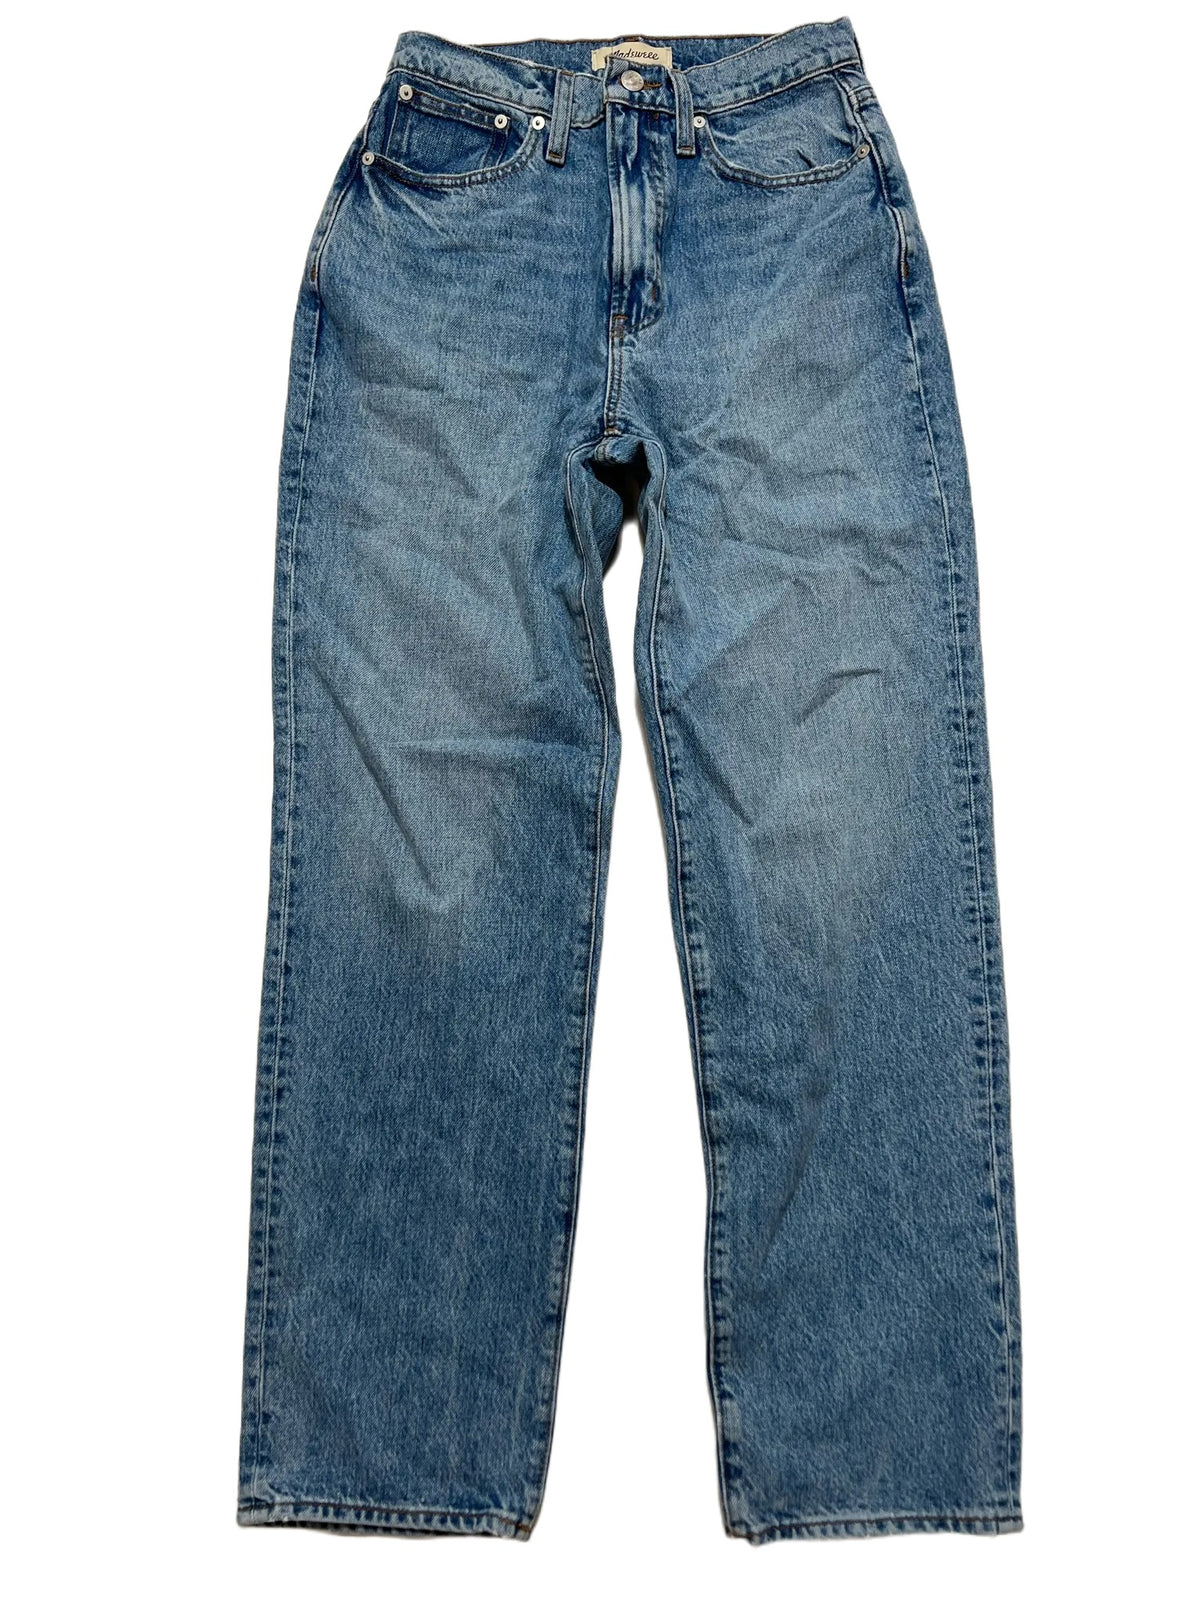 Madewell- High Waisted Jeans